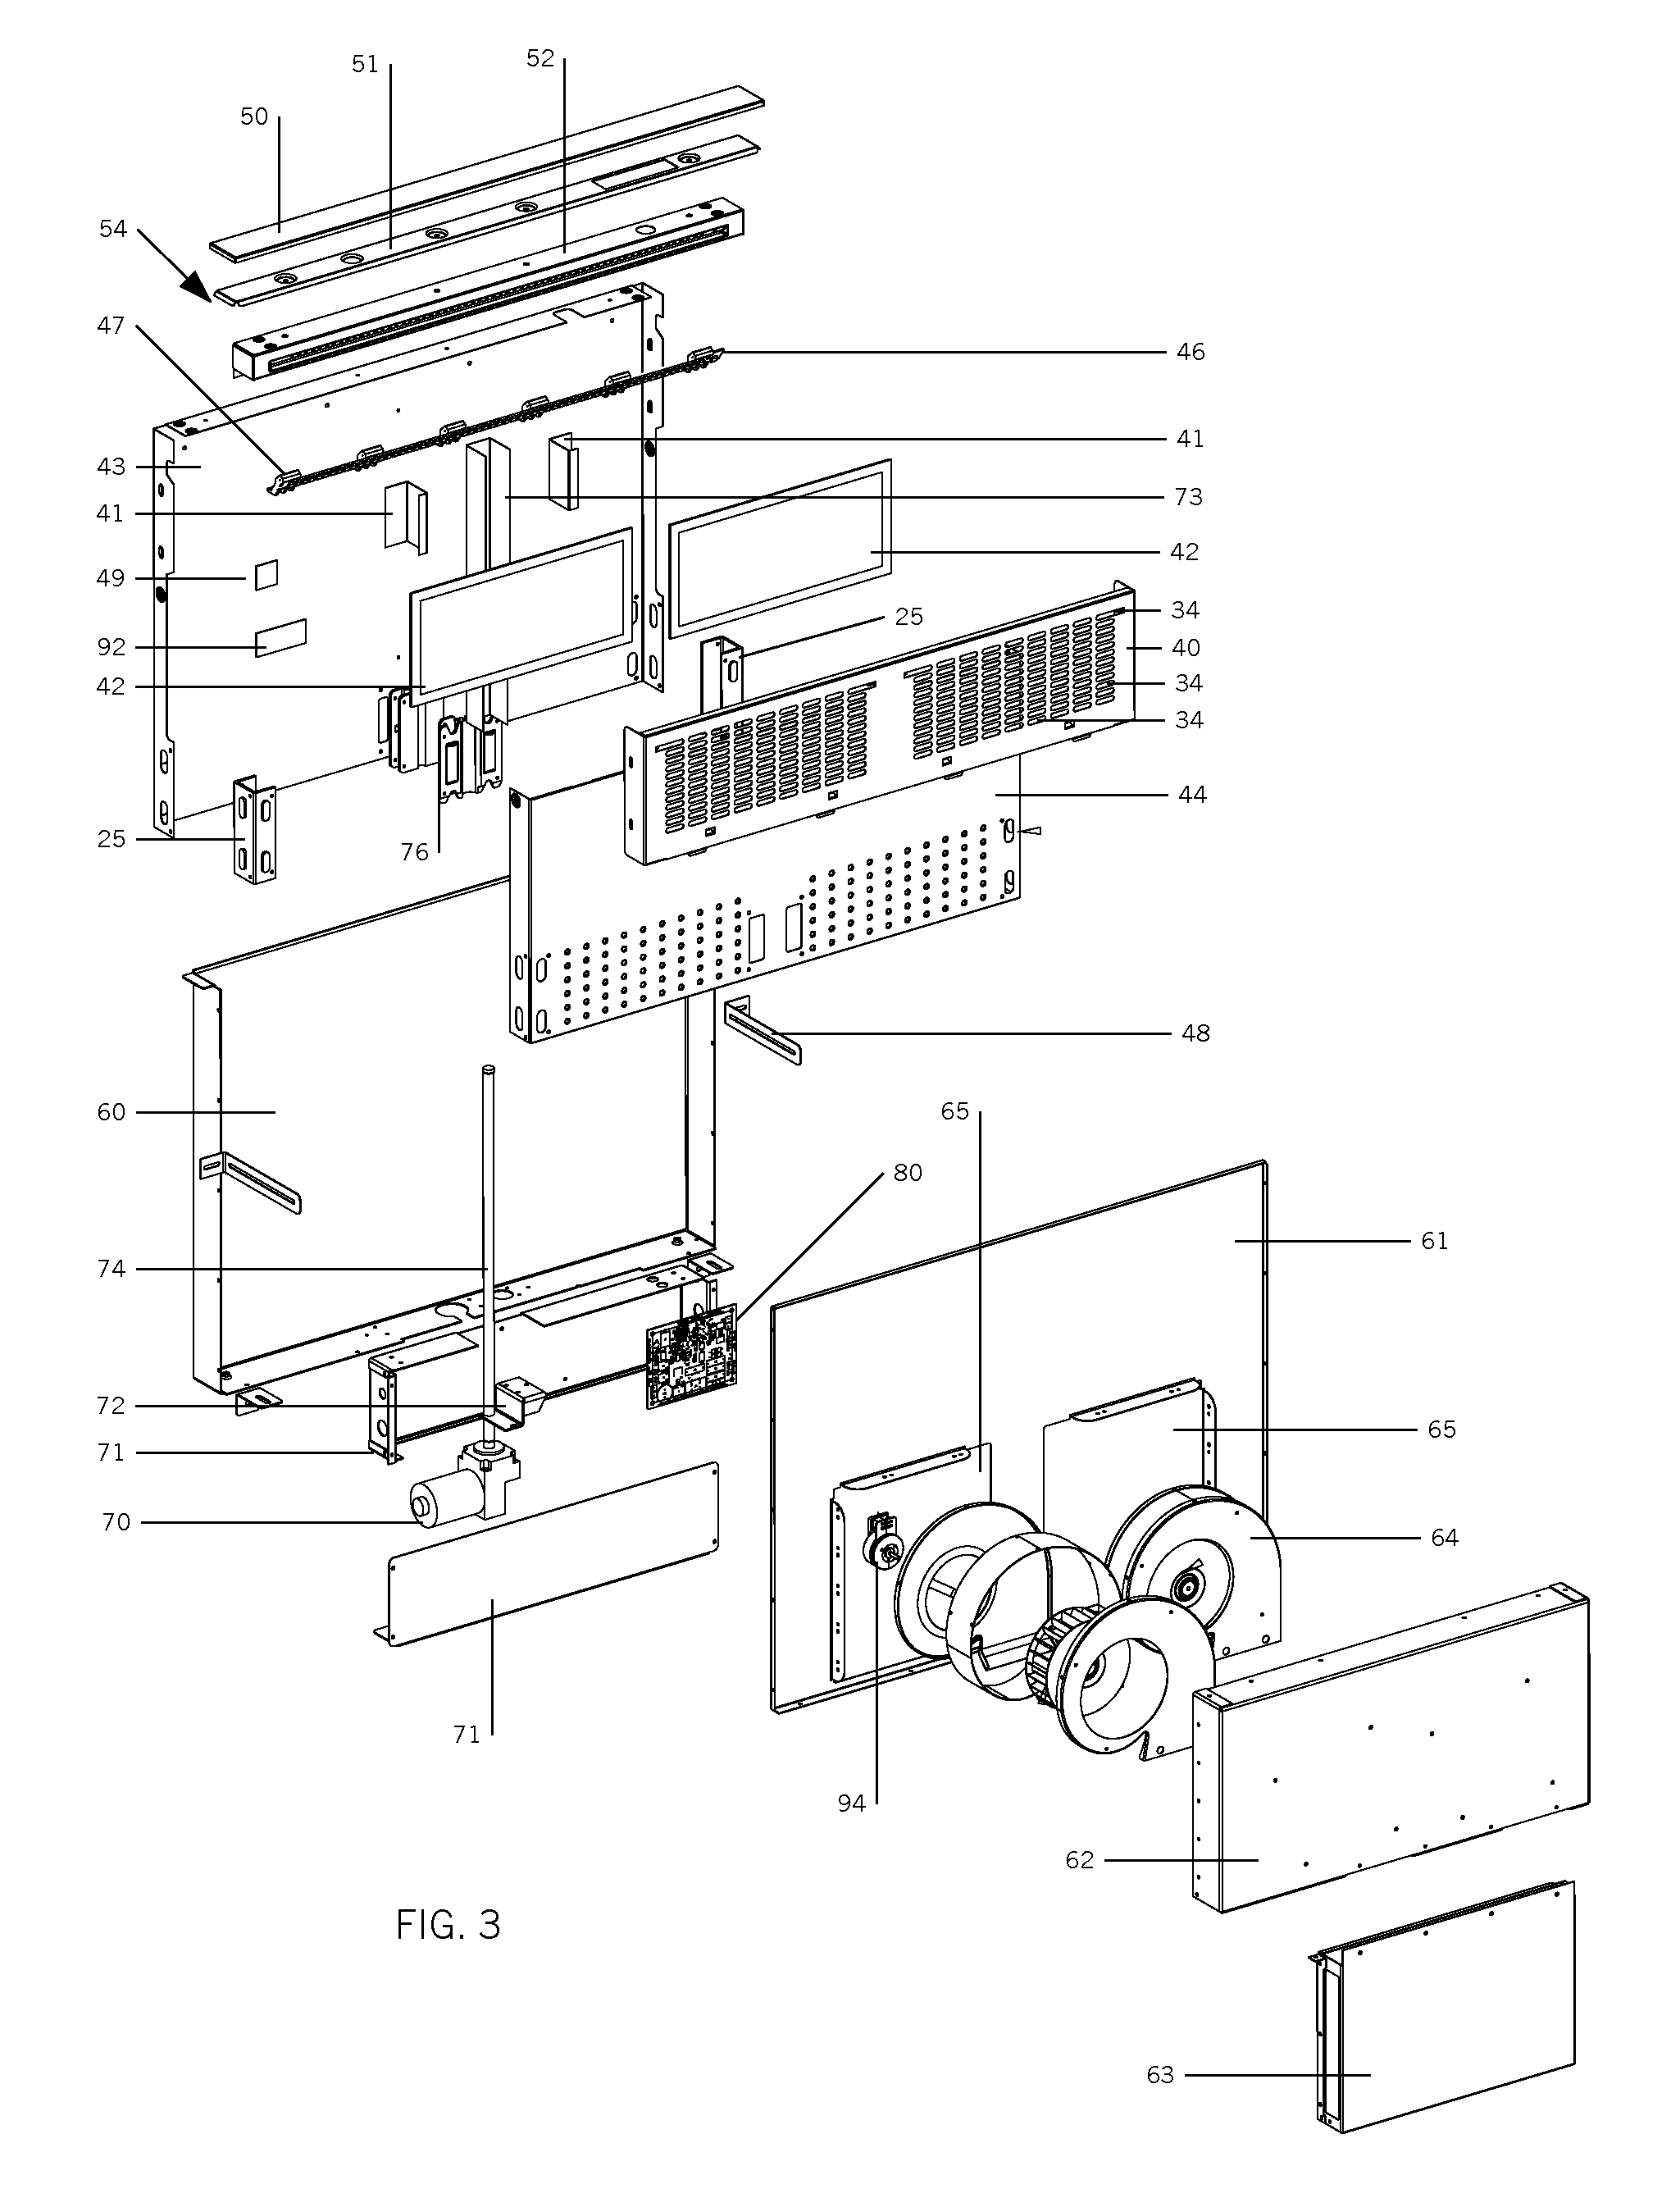 Low depth telescoping downdraft ventilator